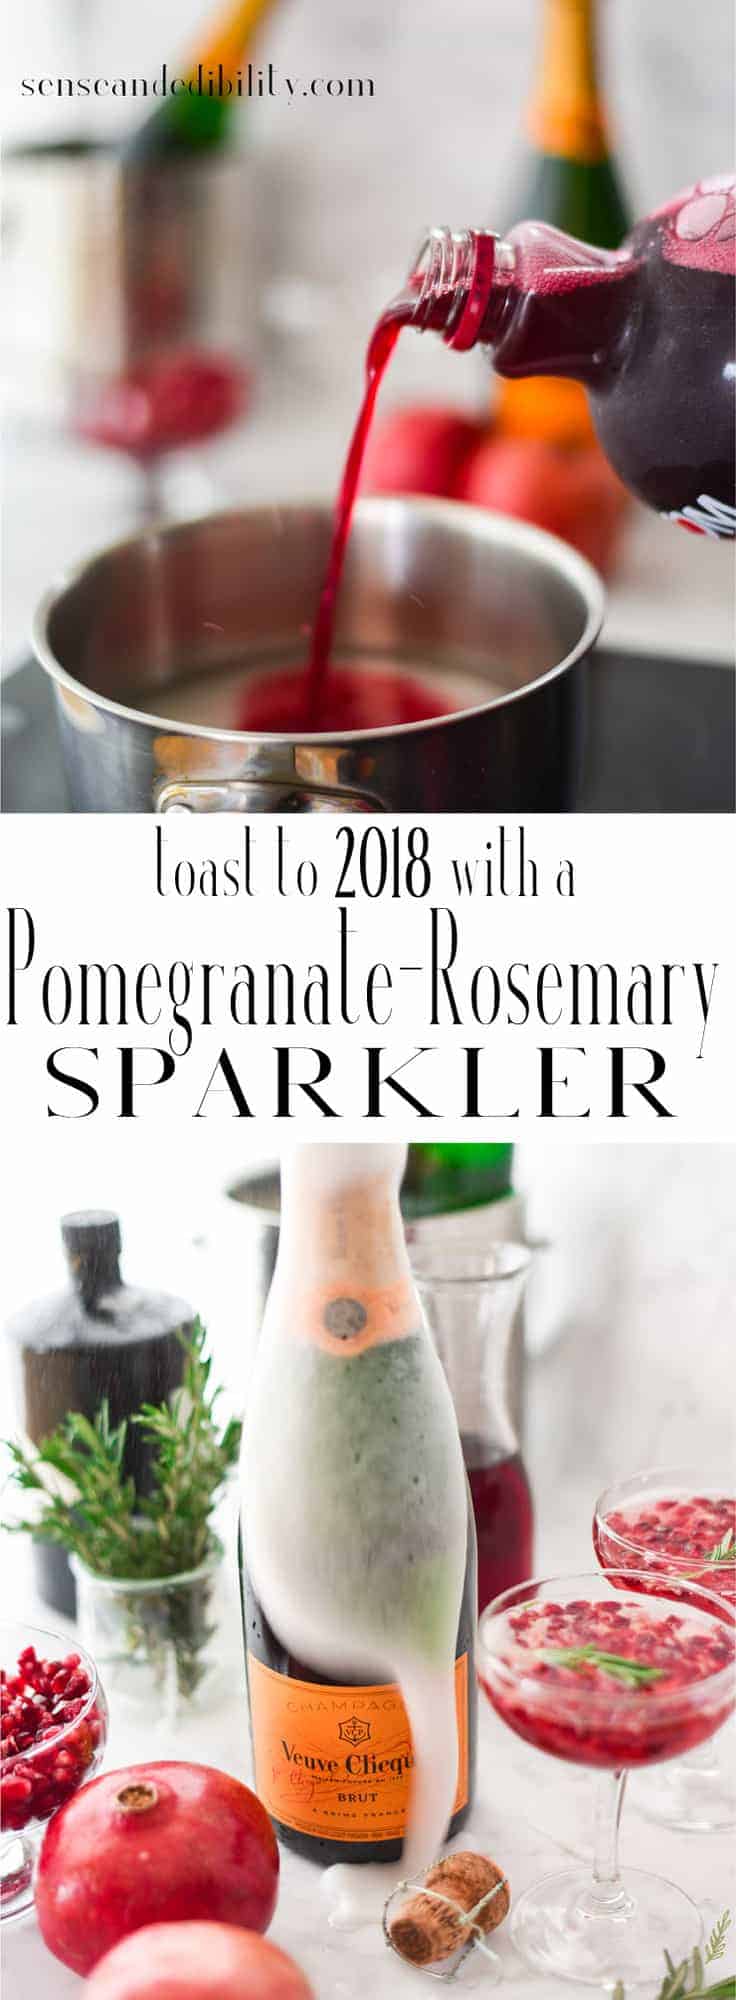 Sense & Edibility's Pomegranate-Rosemary Sparkler Pin